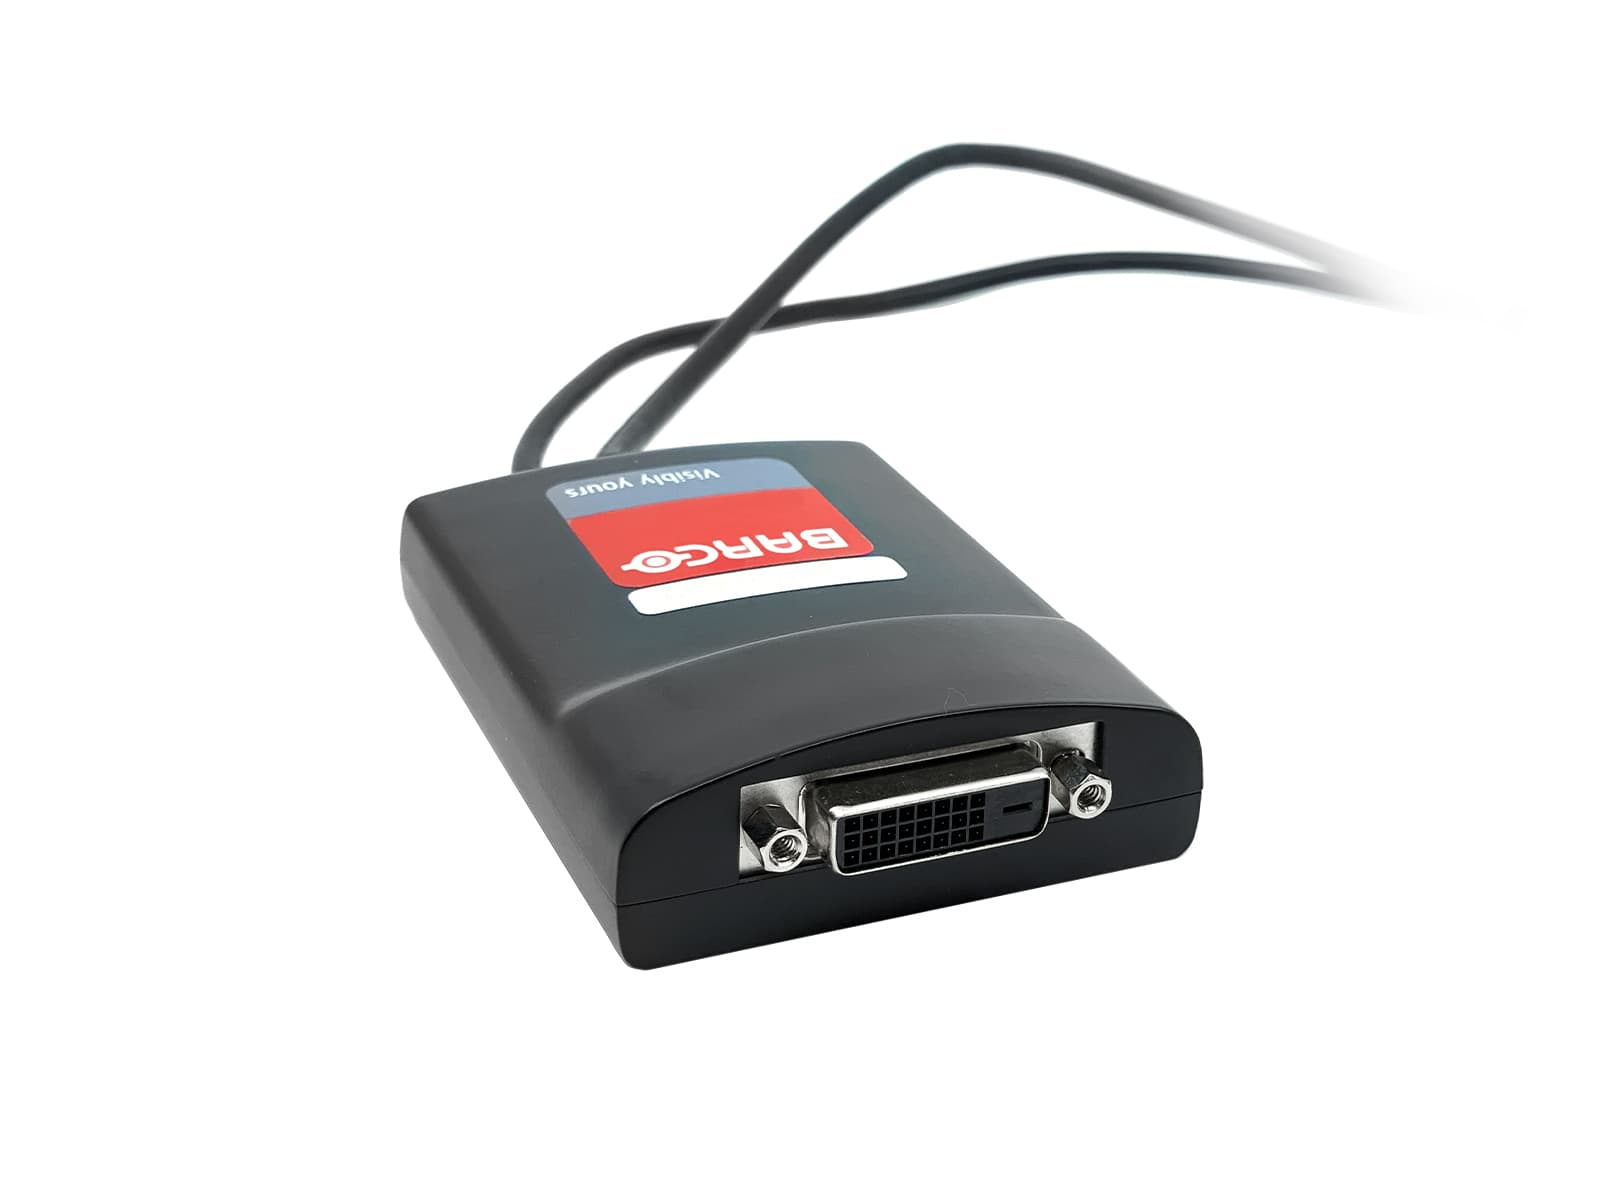 Barco DisplayPort DP to Dual-Link DVI-D Adapter Dongle Converter 330Hz. Up to 2800 x 2100 (K9305105) Monitors.com 